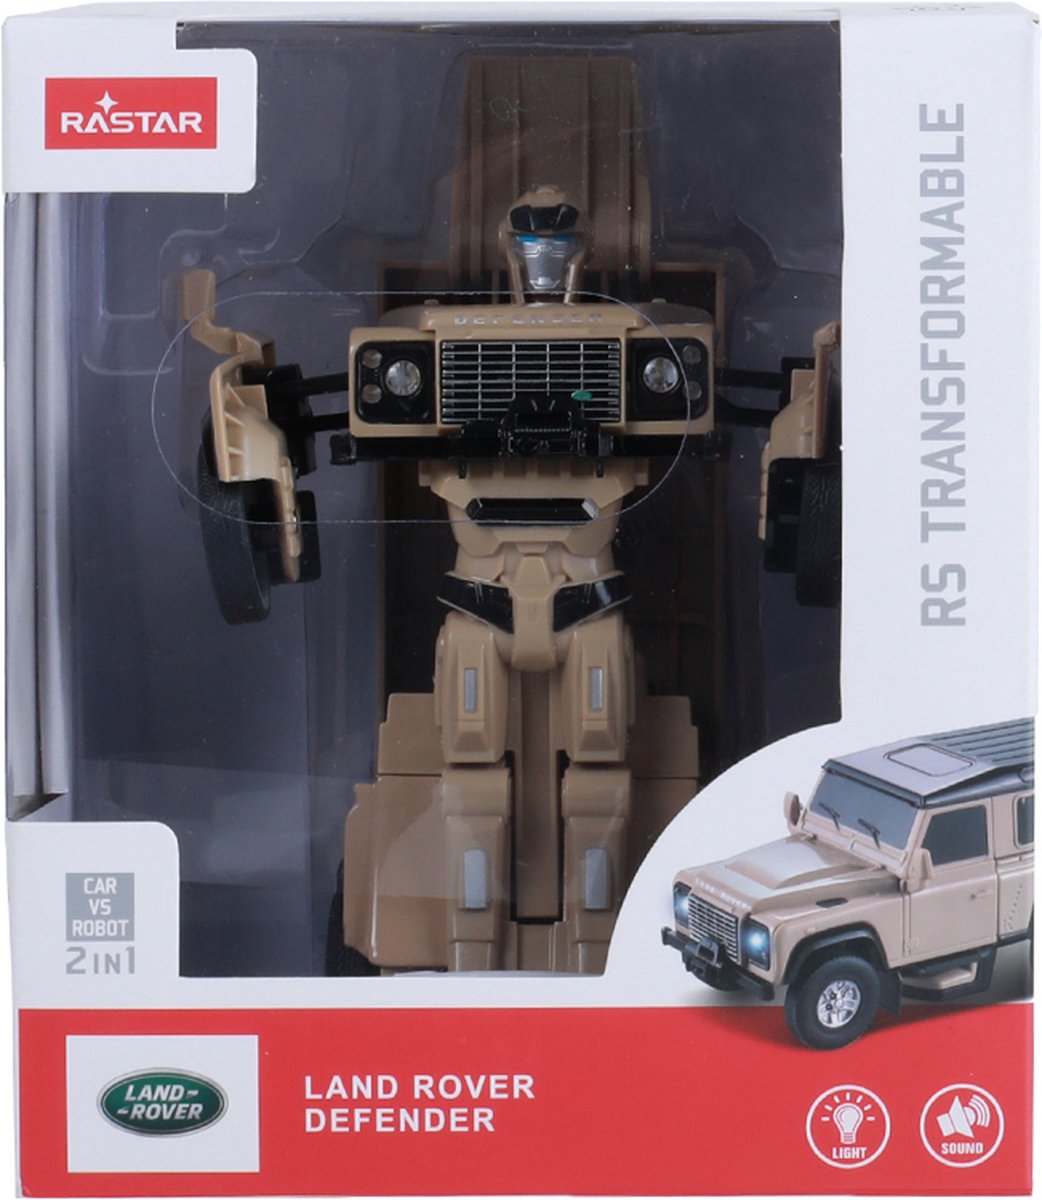 Rastar Landrover Transformer 1:32 Scale Model